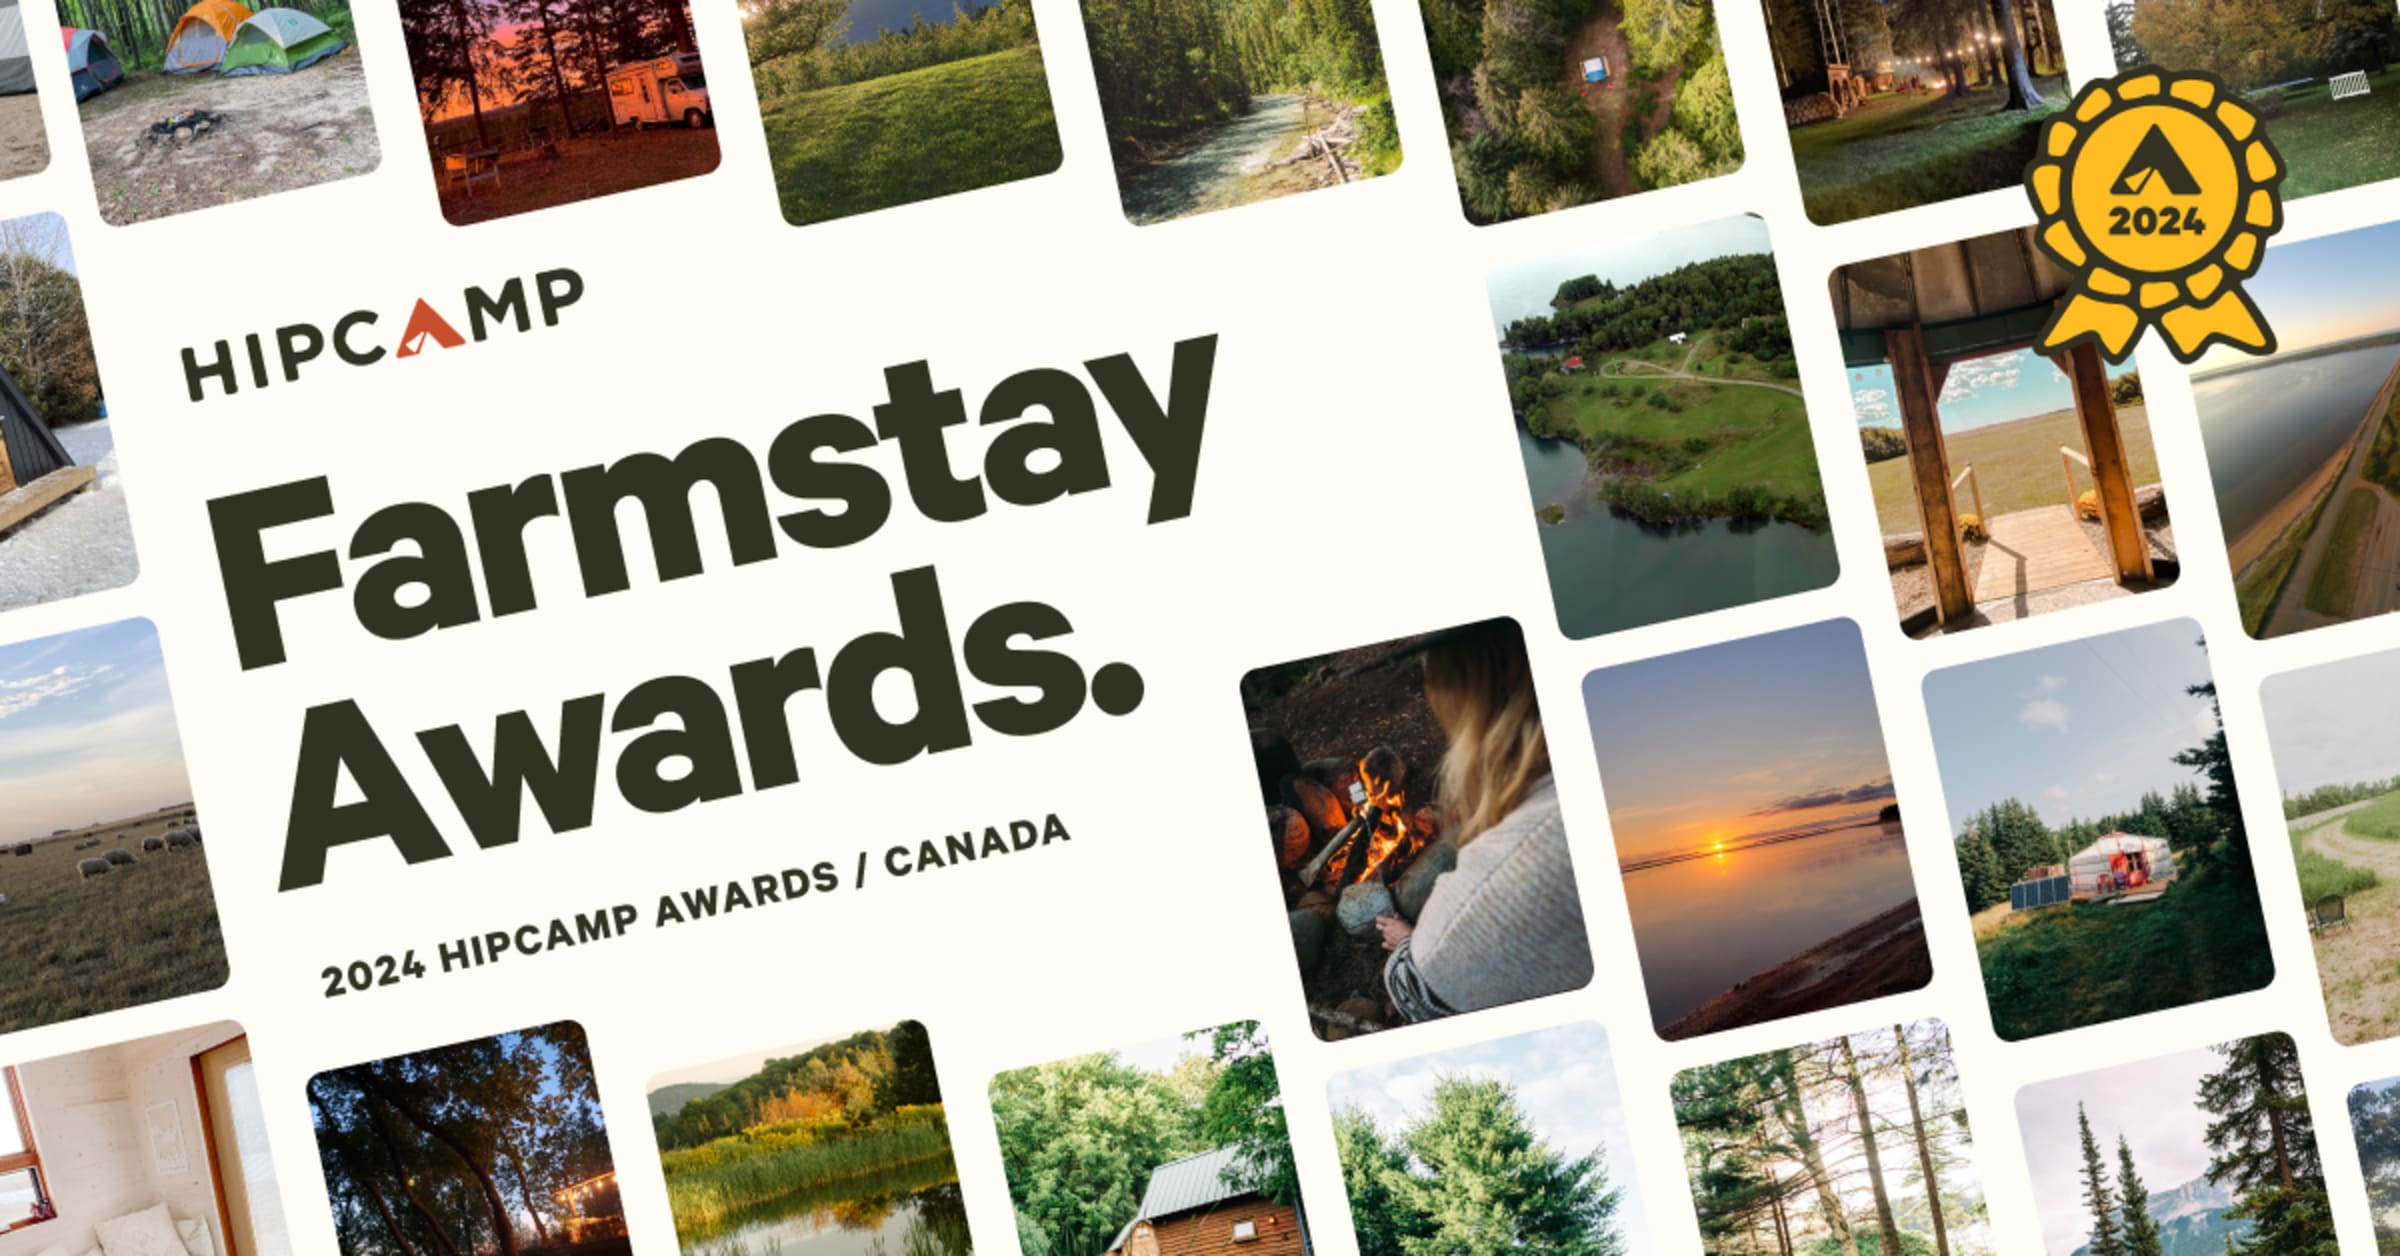 Hipcamp Awards 2024: Best Farmstays in Canada